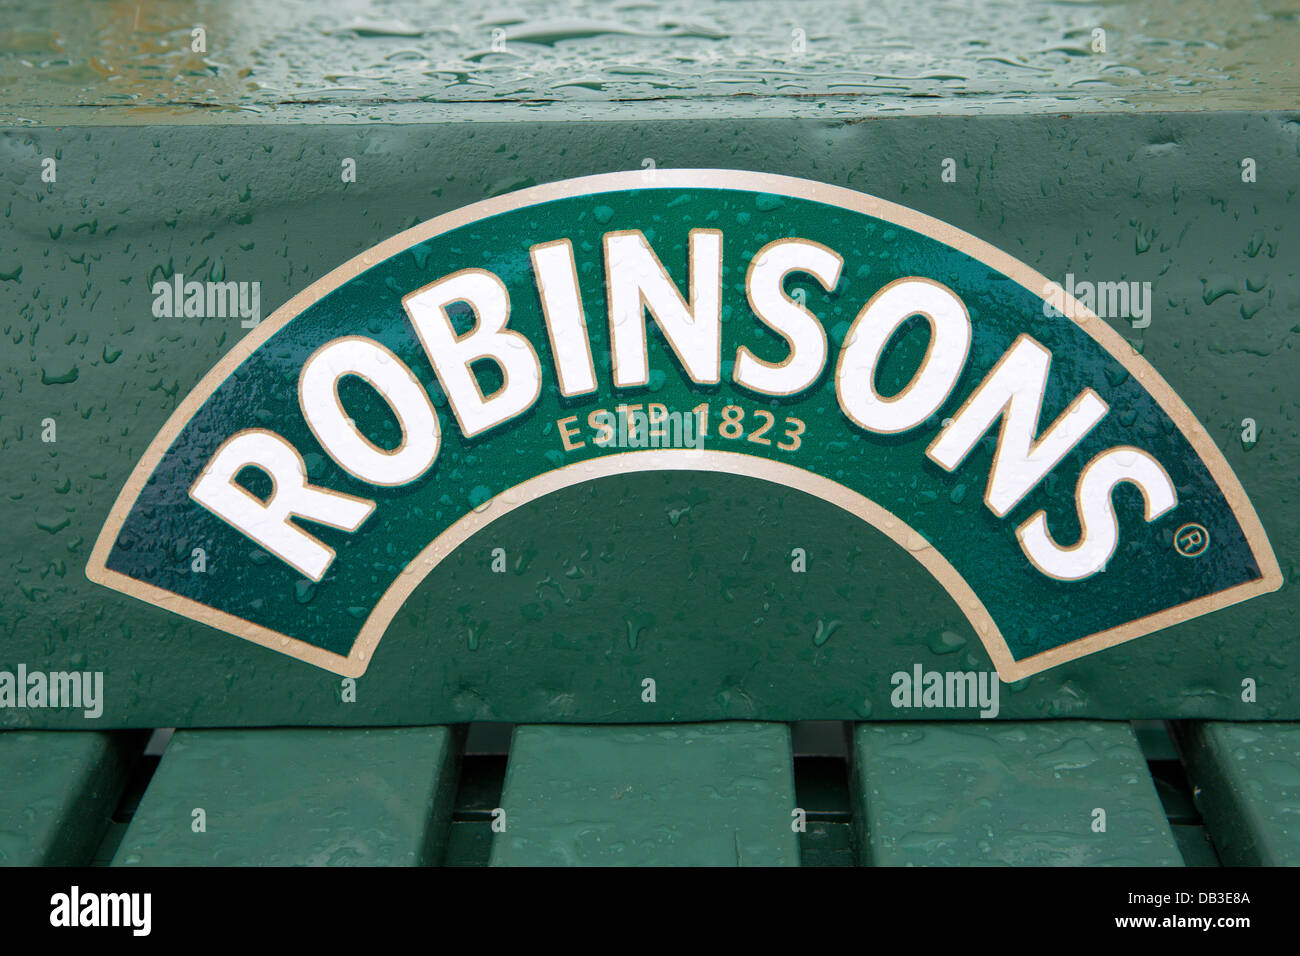 Robinsons barley water sign at Wimbledon tennis on umpires chair Stock Photo